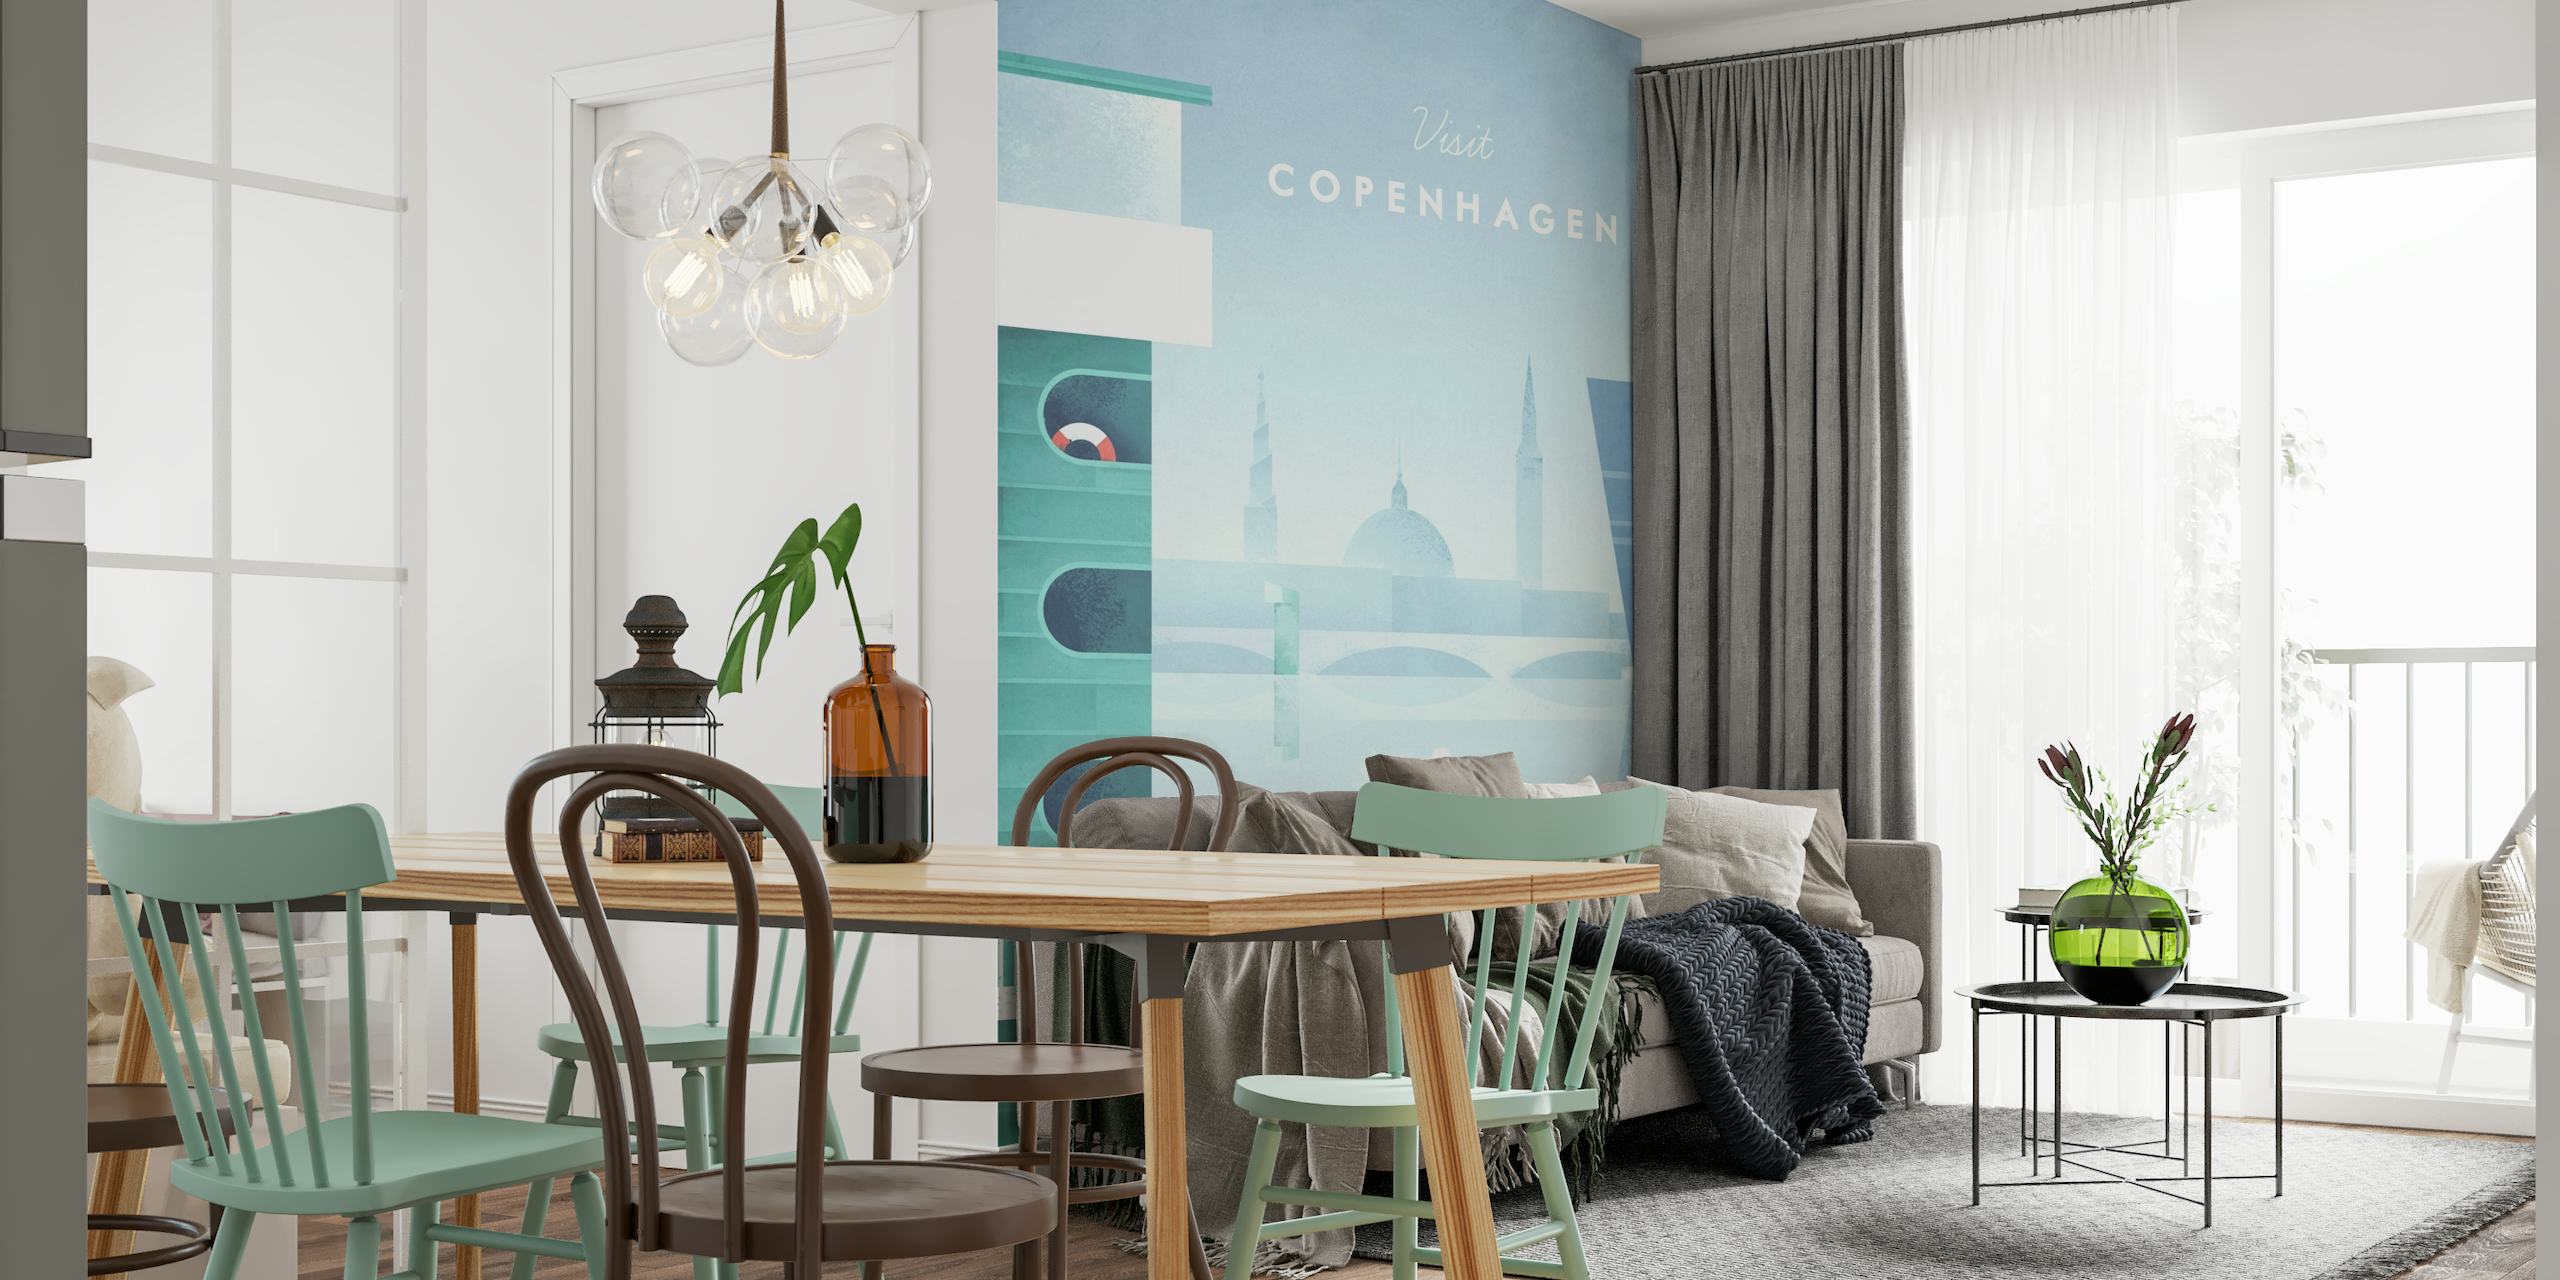 Copenhagen Travel Poster papel pintado